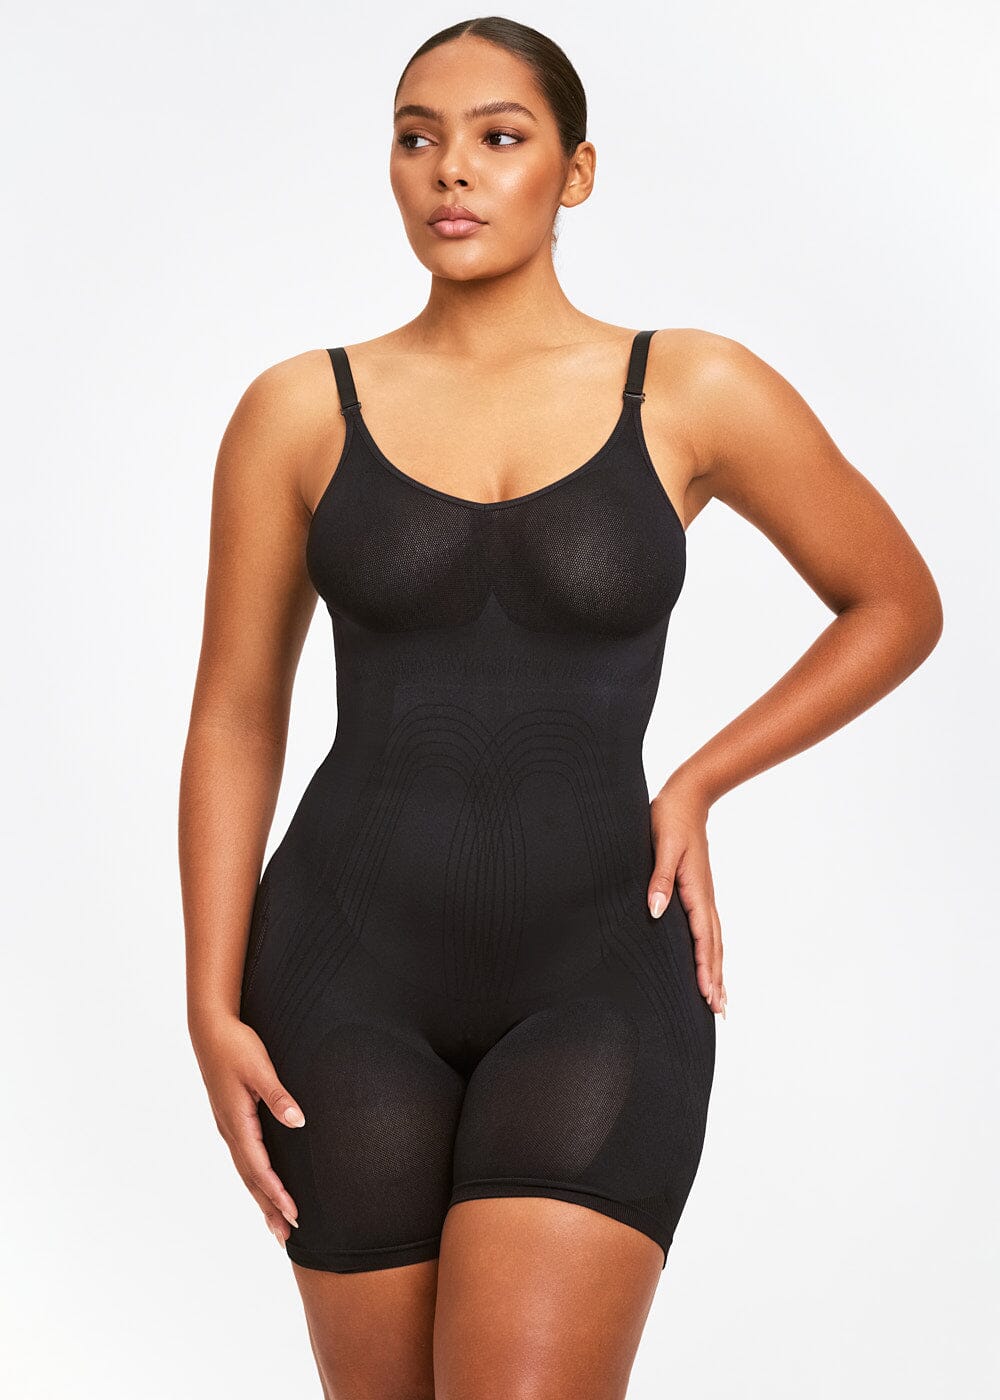 InstantFigure Women's Firm Compression Shaping Full-Length Cami Bodysuit -  Walmart.com